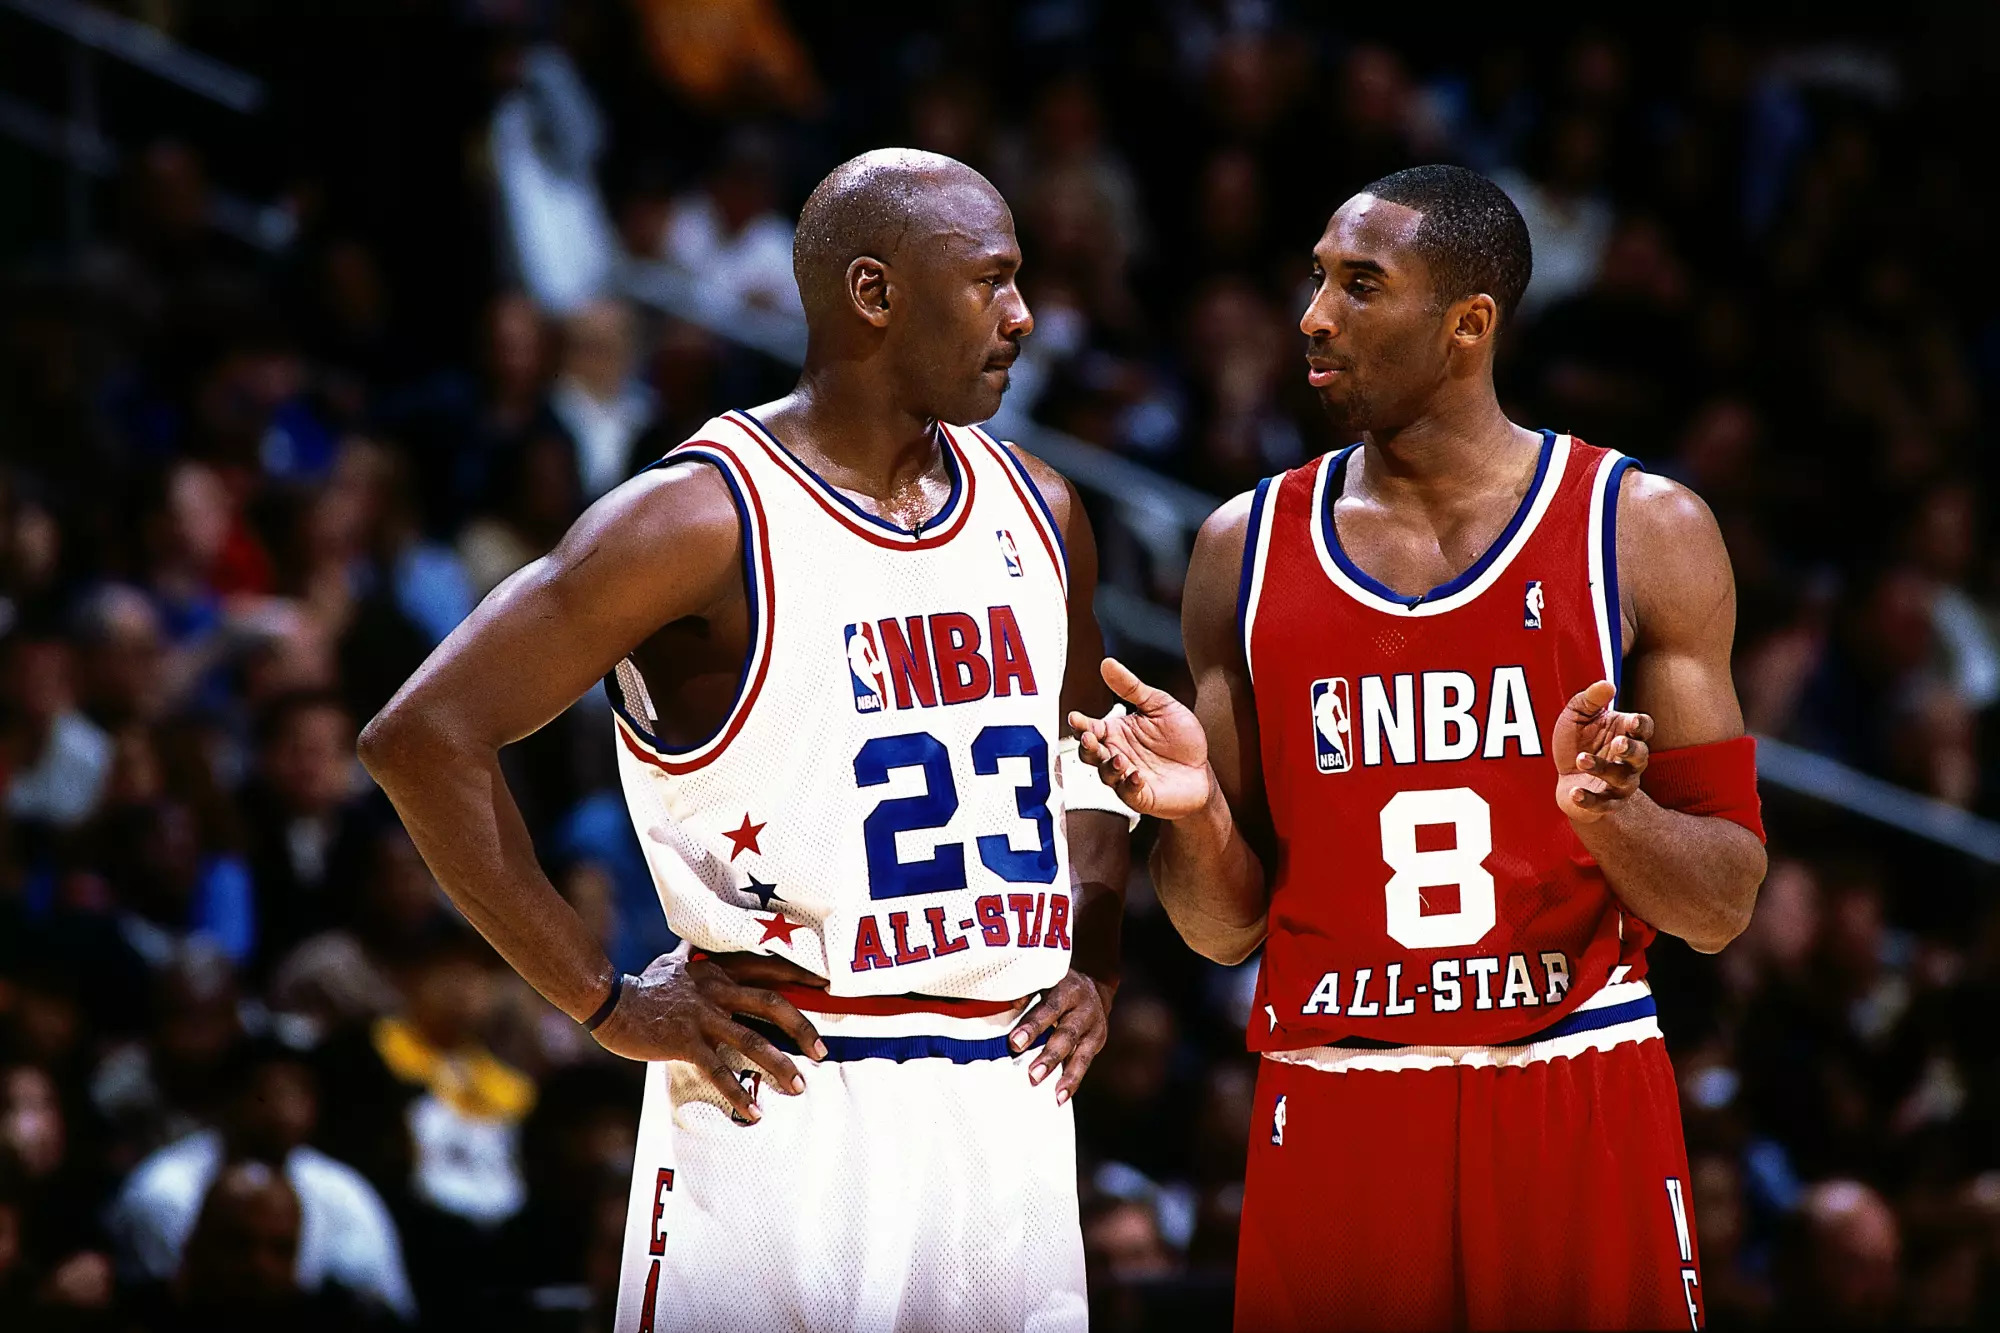 Kobe and Mike